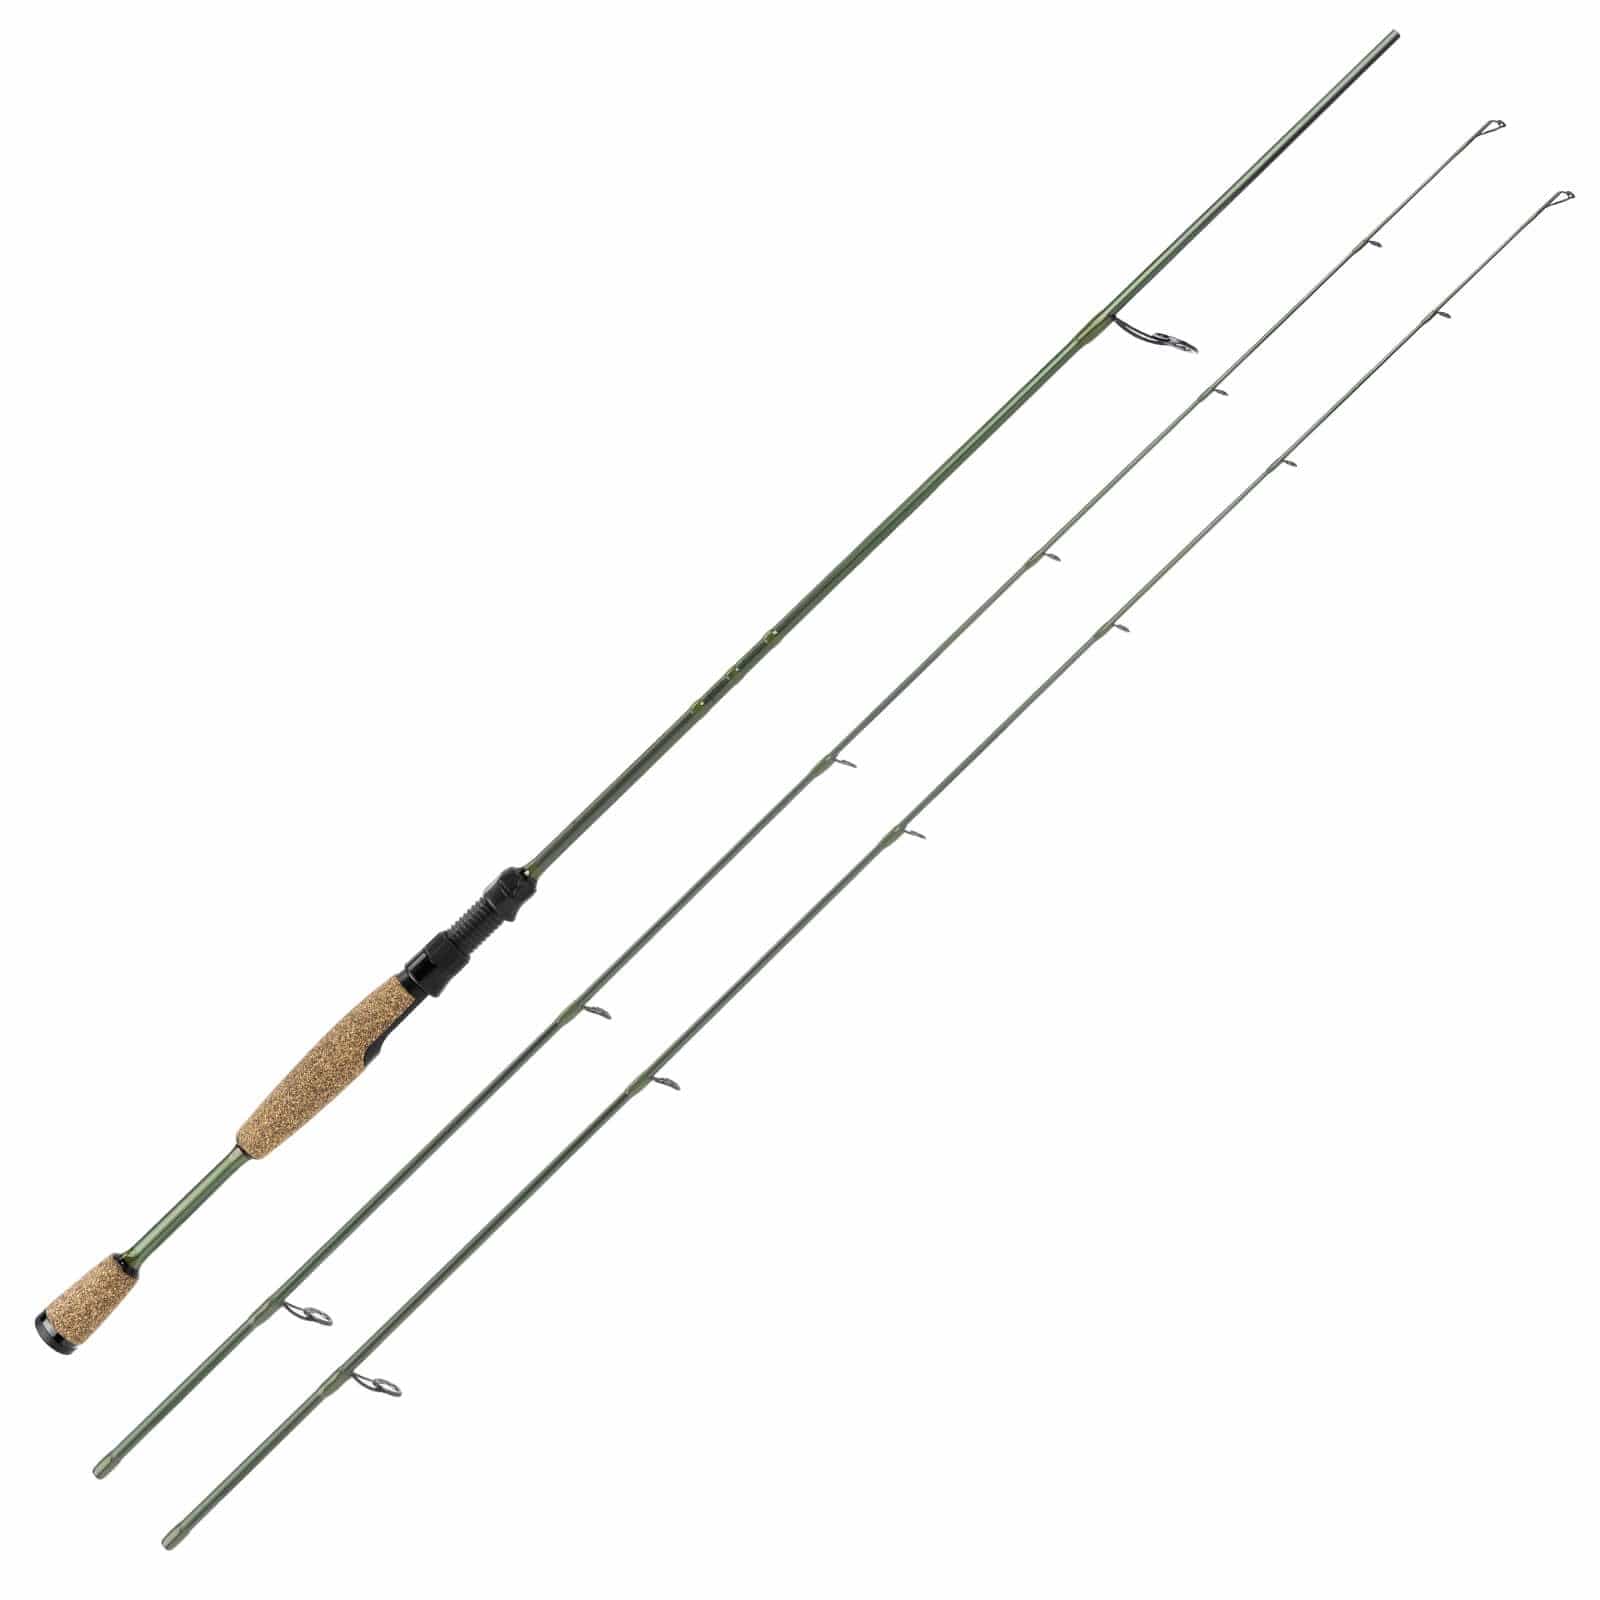  KastKing Perigee II Fishing Rod and Destron